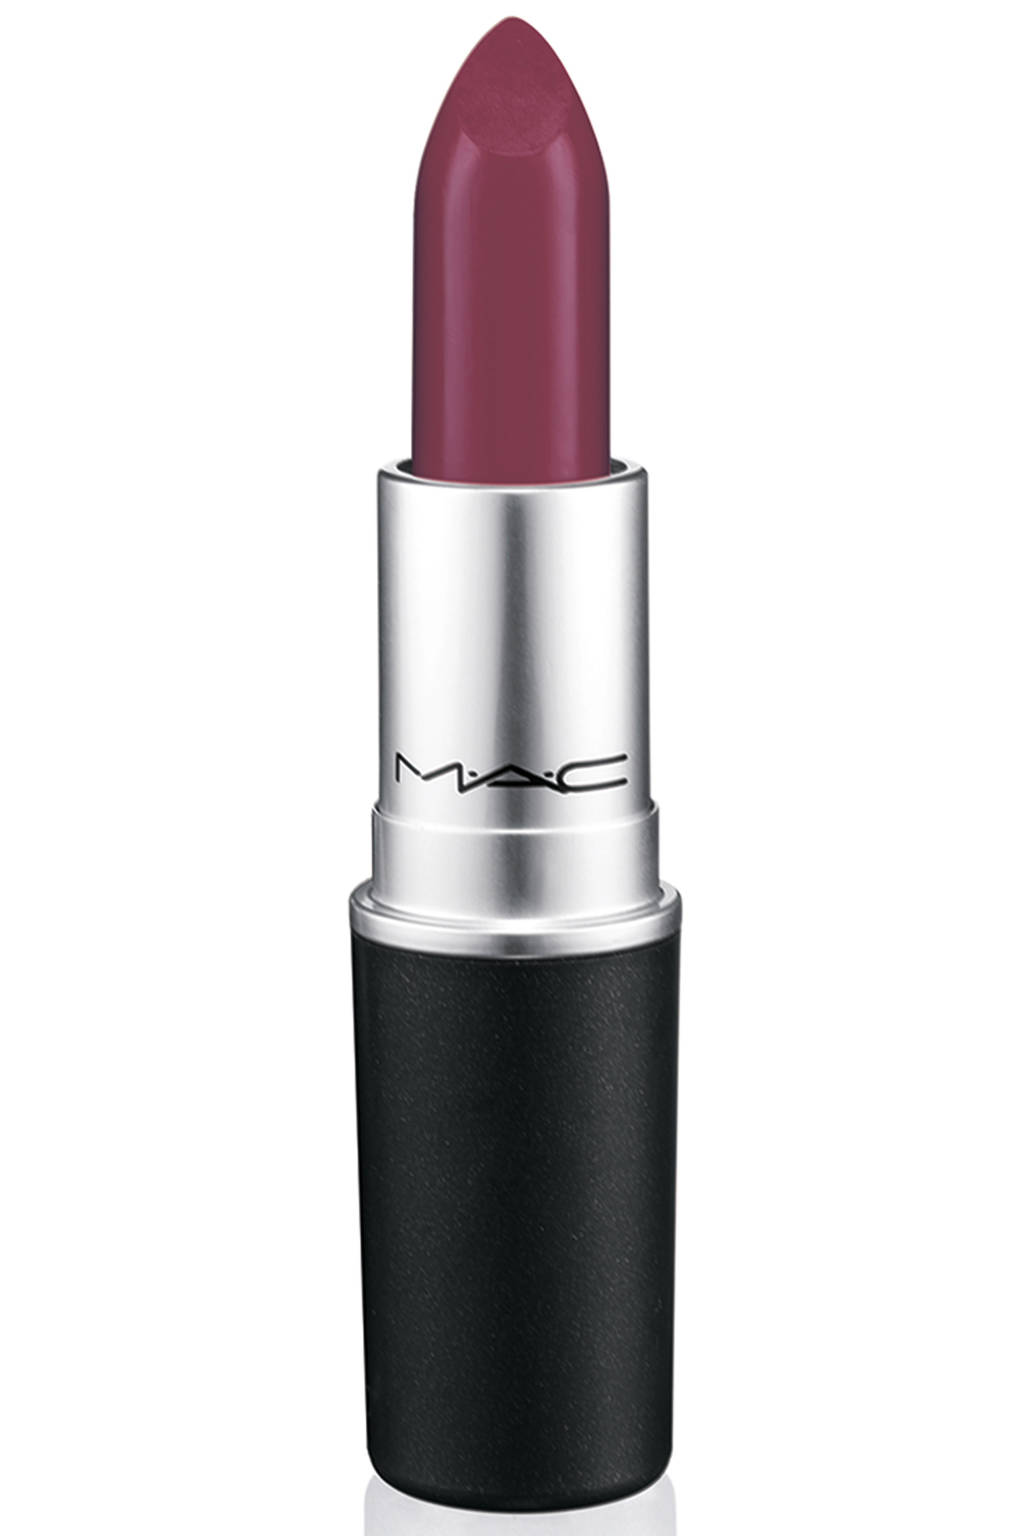 hbz-fall-lipstick-preview-berry-mac-lg.jpg